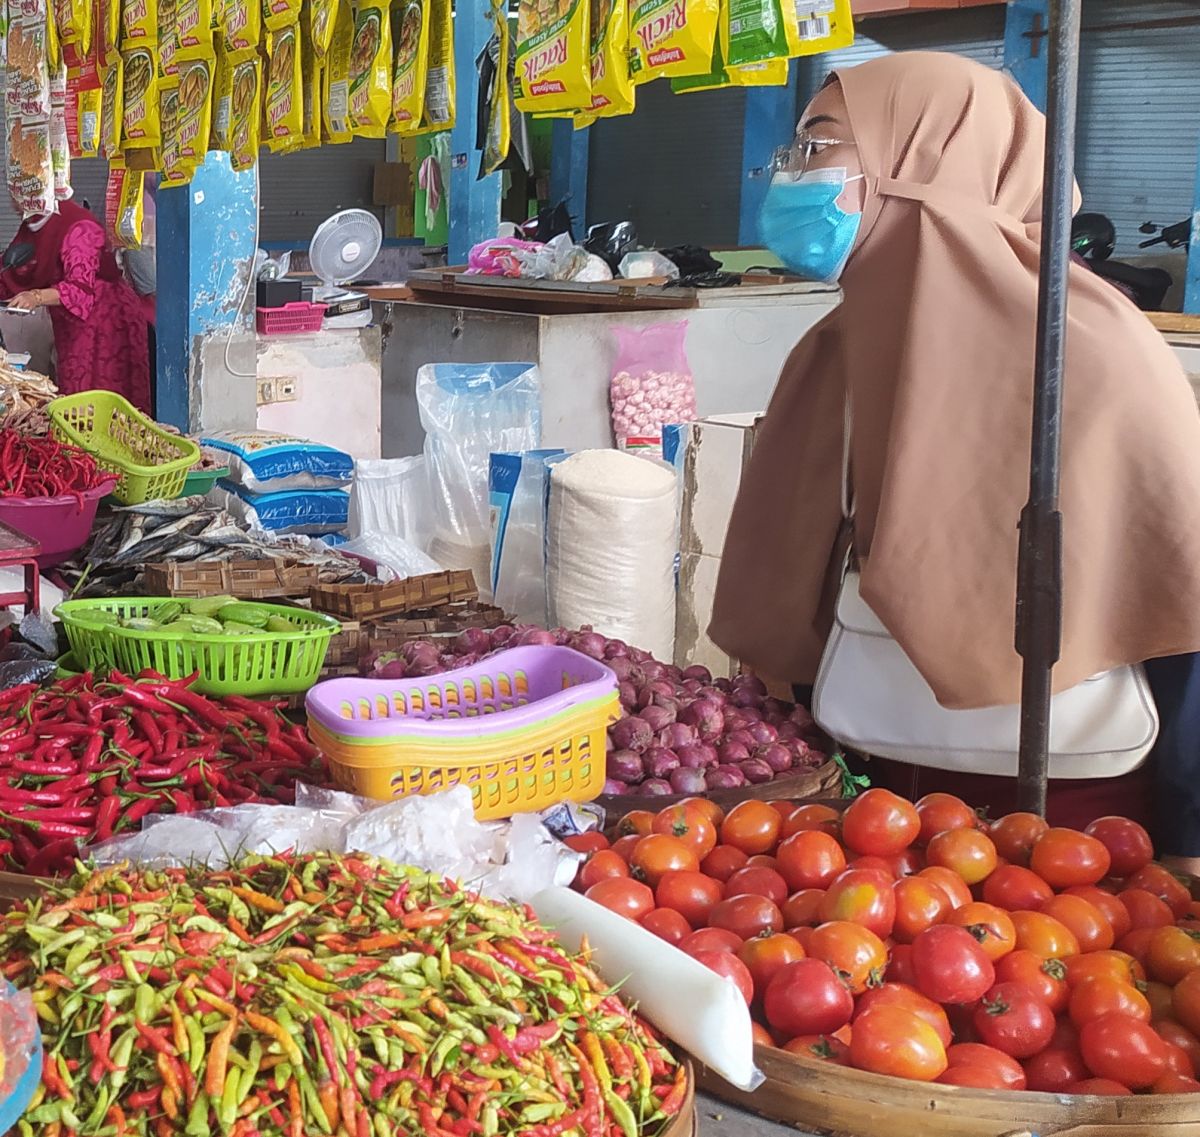 Penjual bahan pangan di Pasar Sidoharjo Lamongan. (Foto: Adyad Ammy Iffansah)